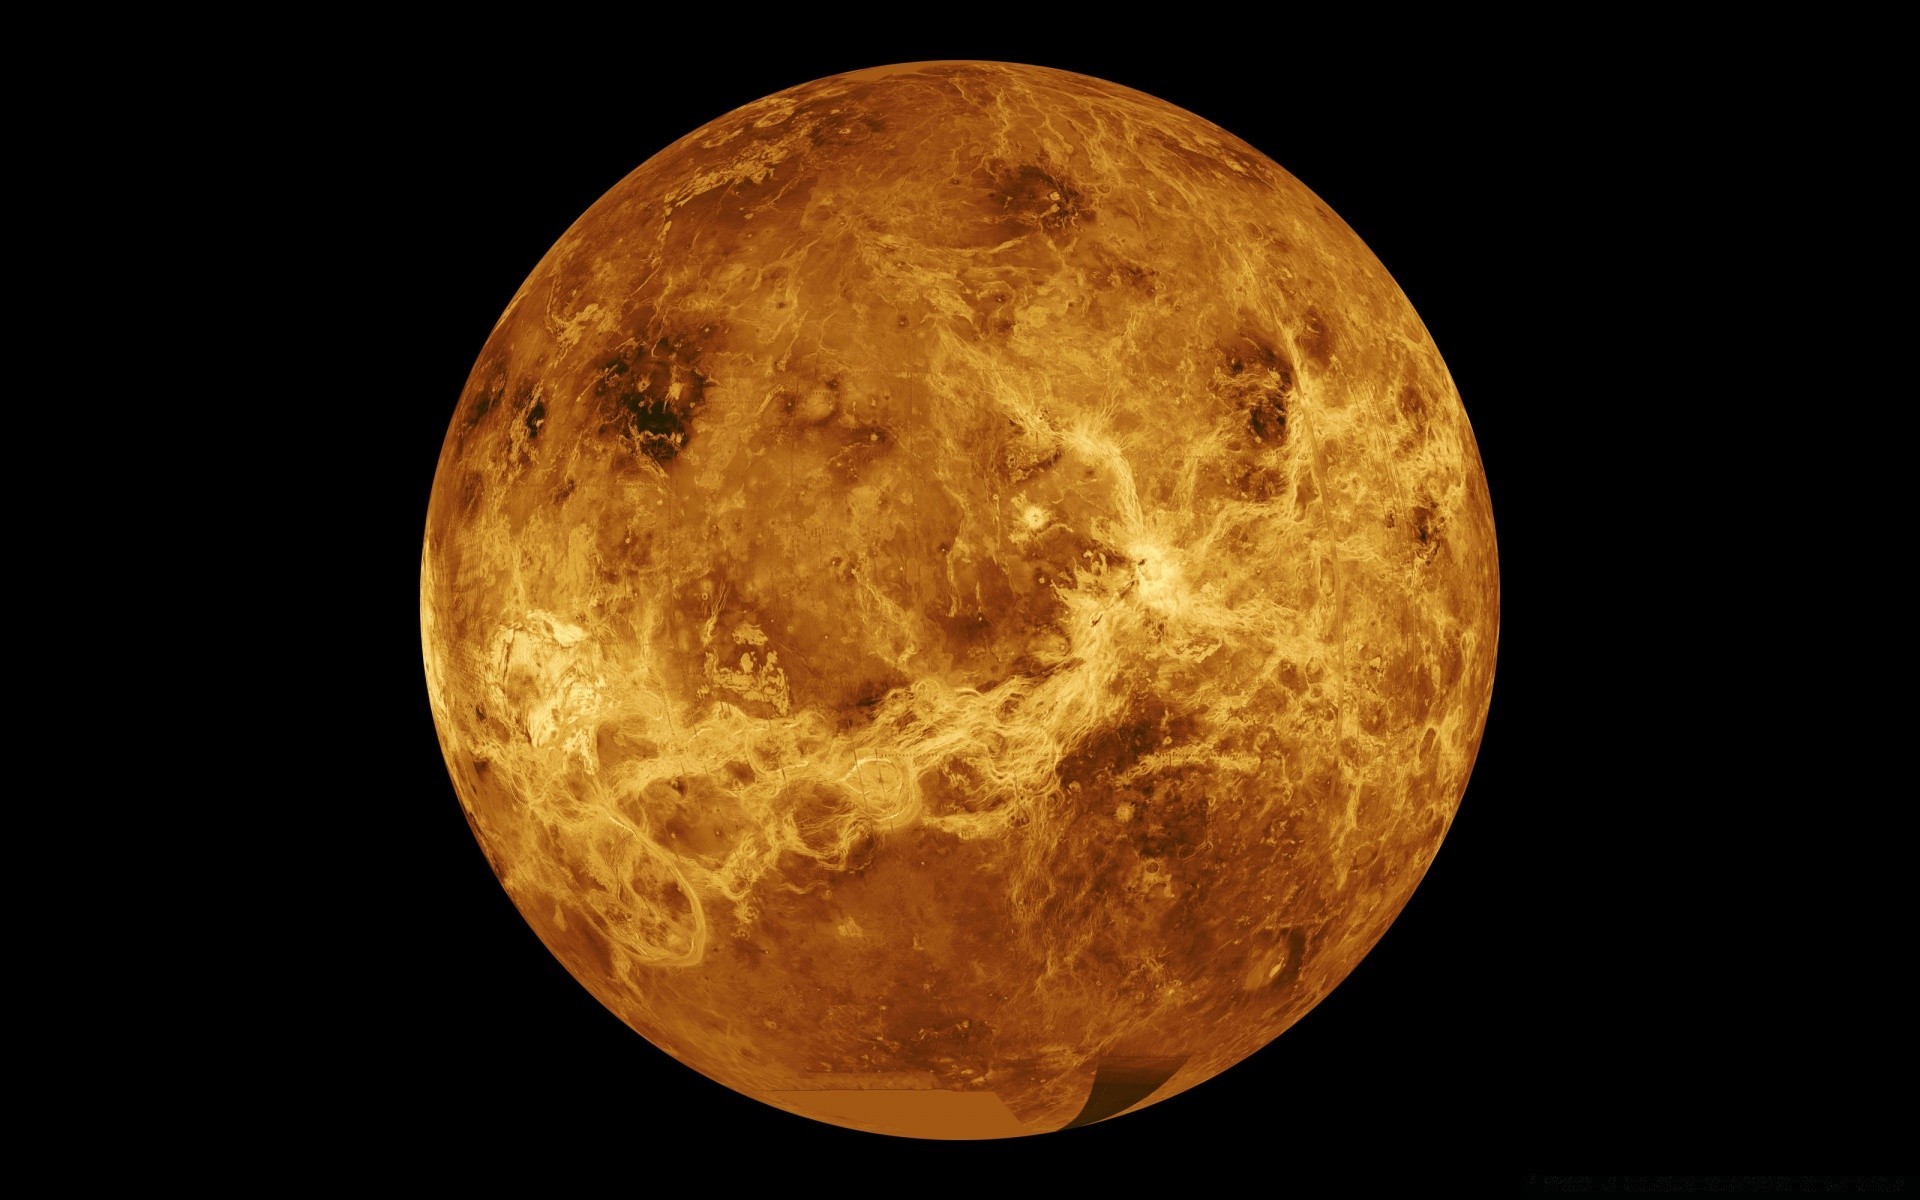 planets astronomy moon planet ball-shaped dark solar system space sphere luna exploration science jupiter orbit mars satellite solar astrology